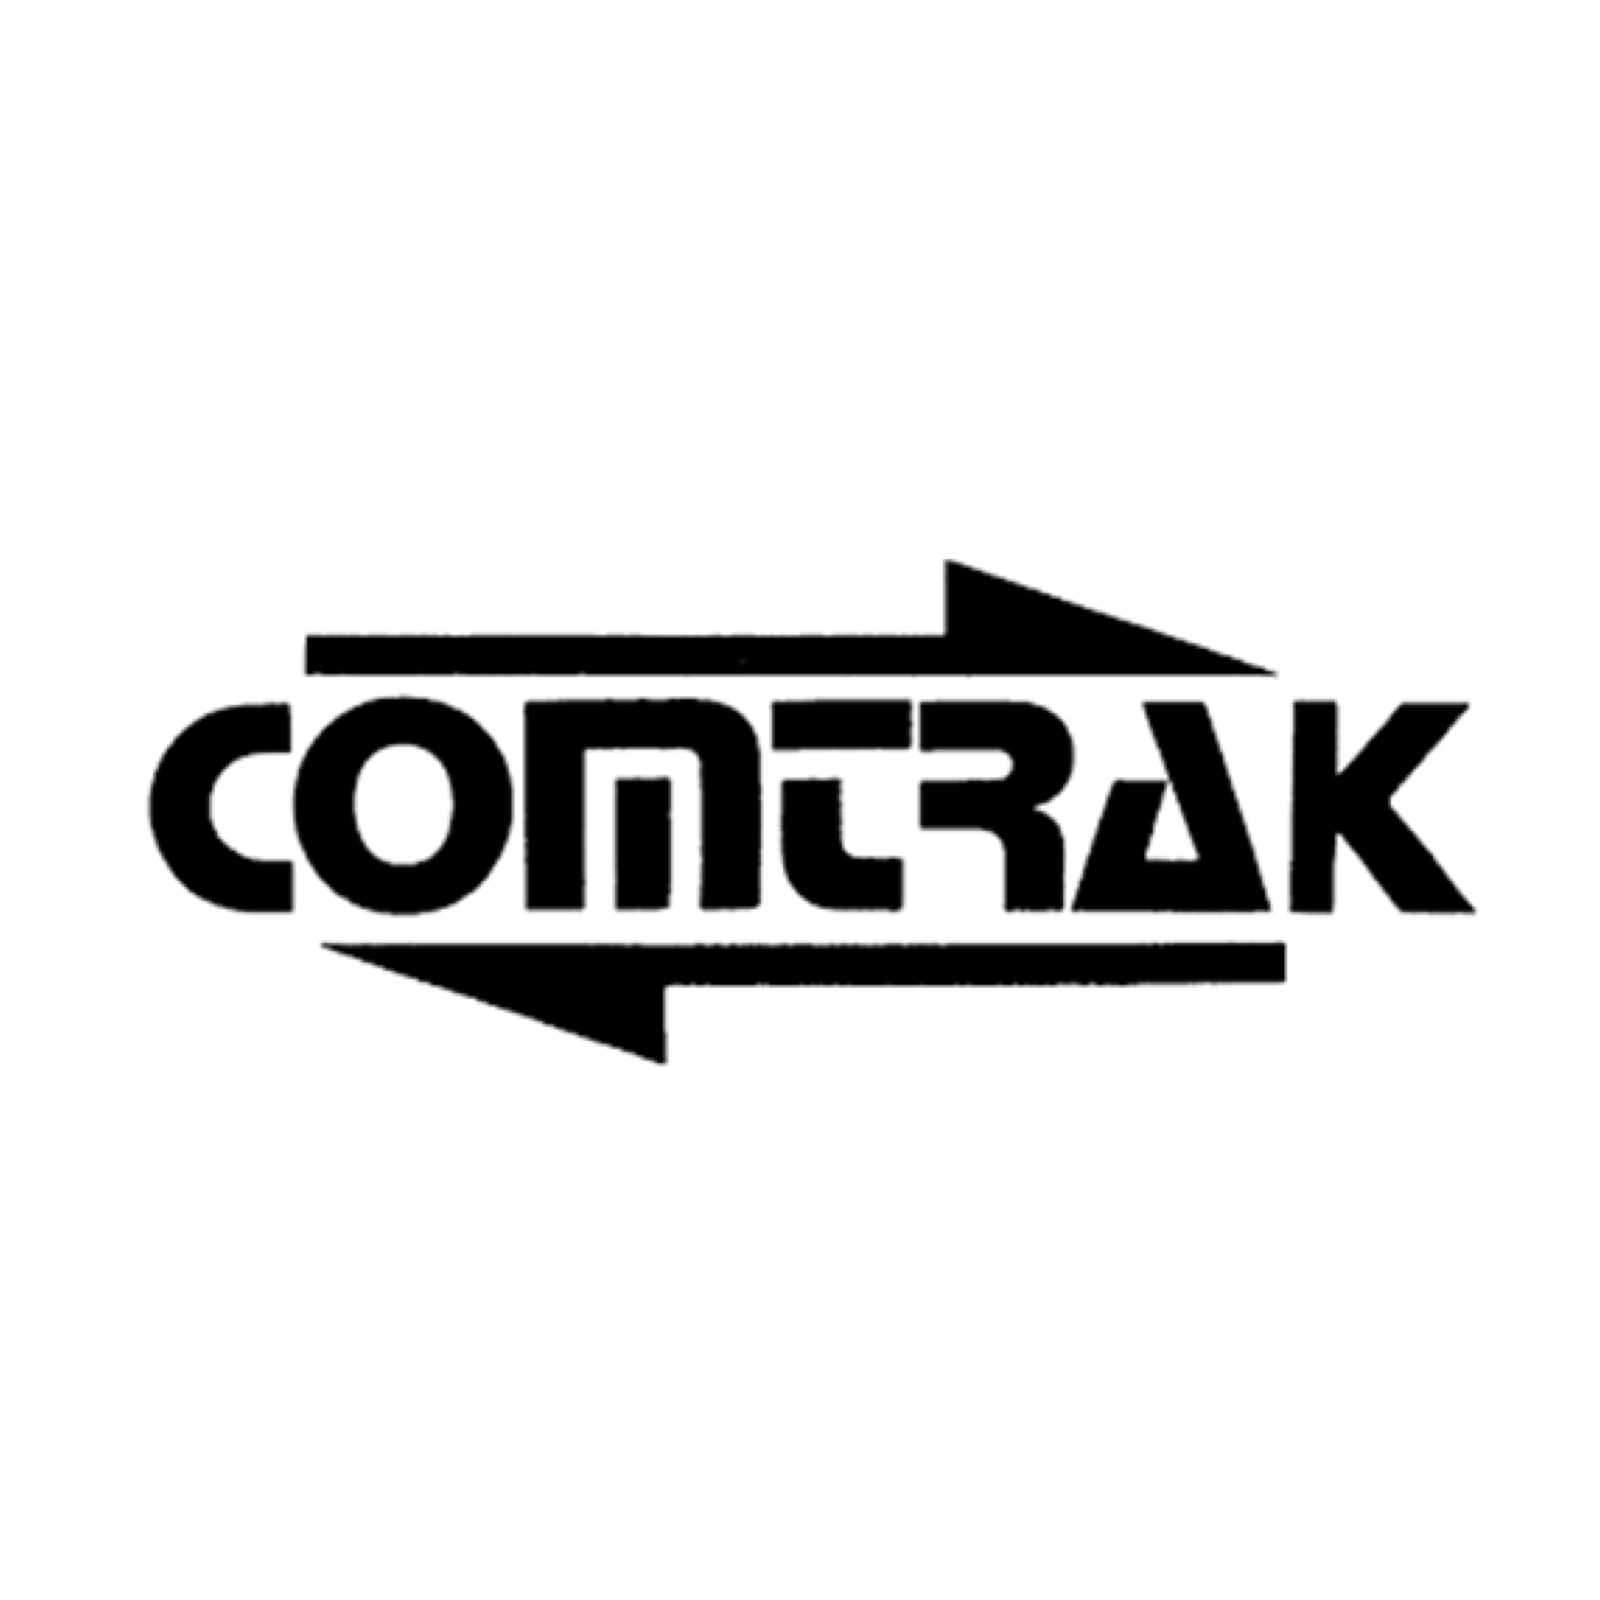 Comtrak